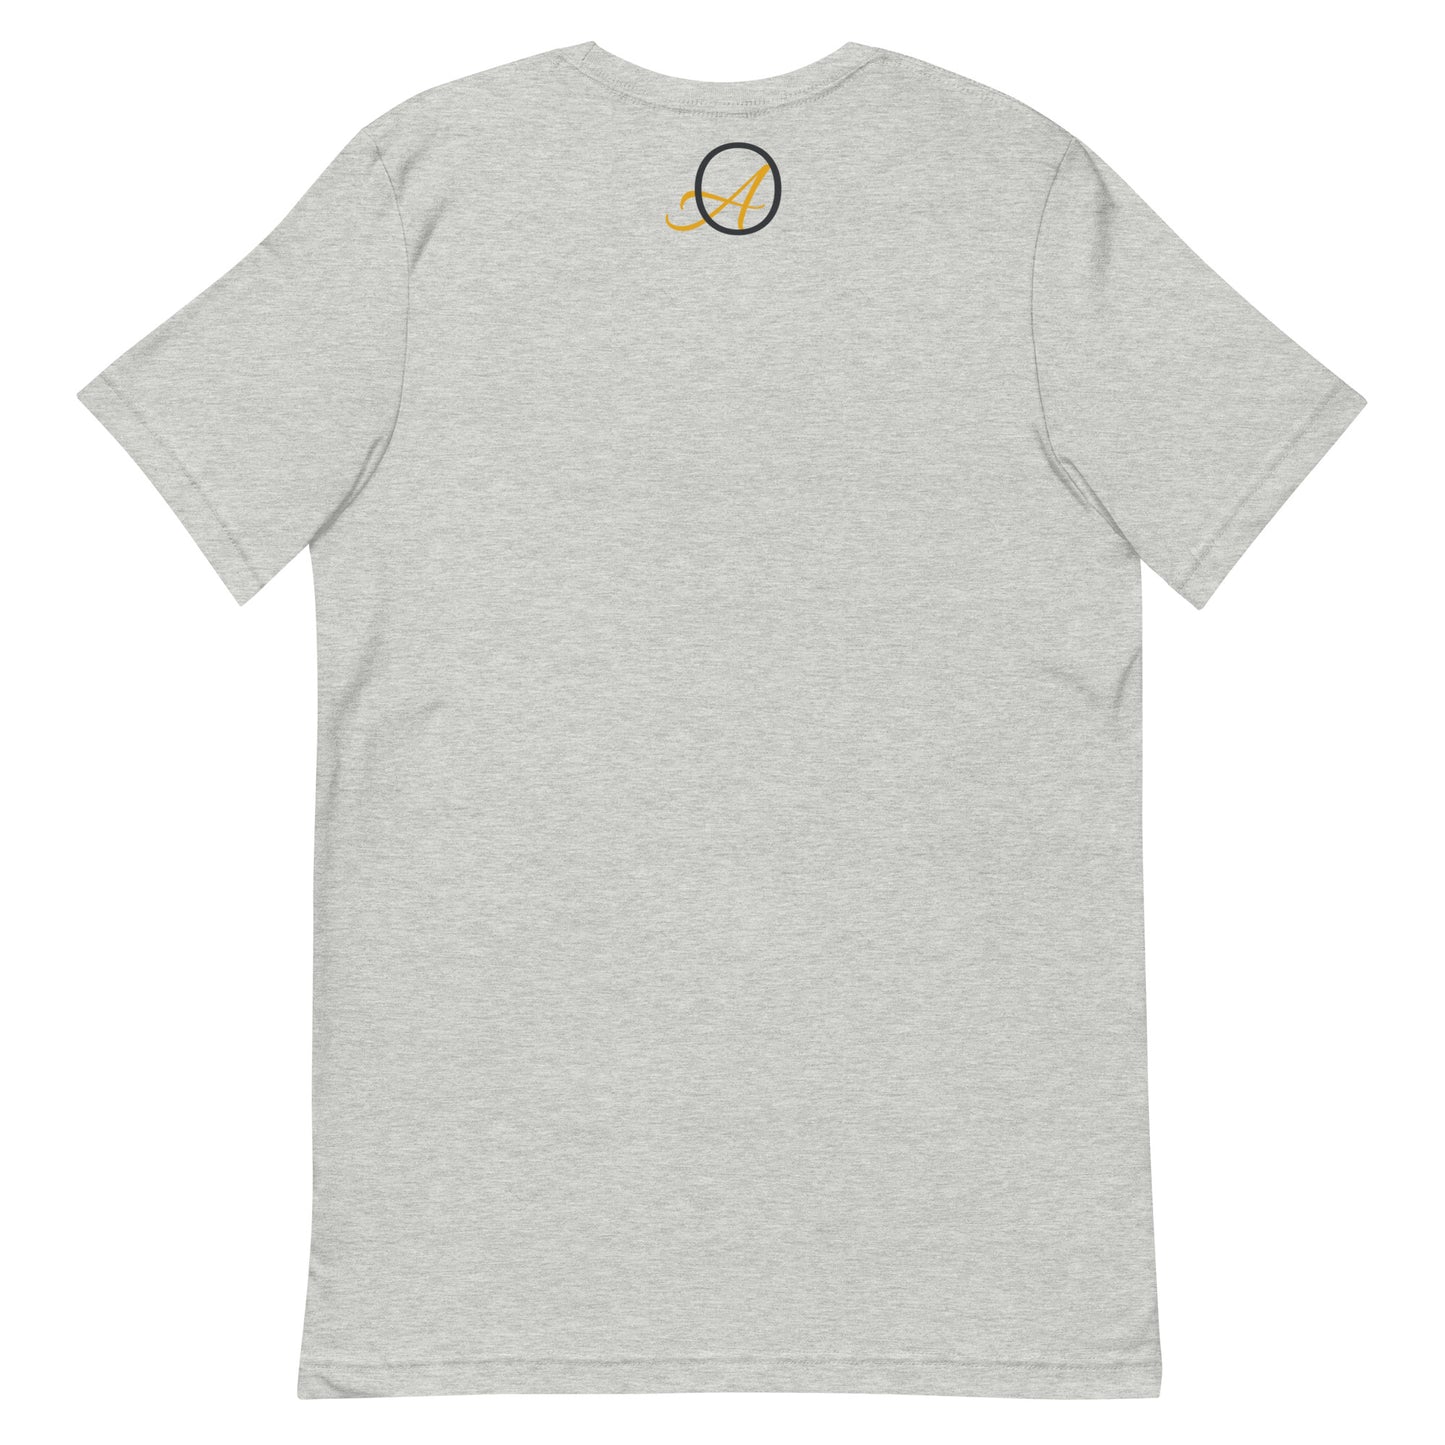 Orient Yourself - Light Unisex t-shirt